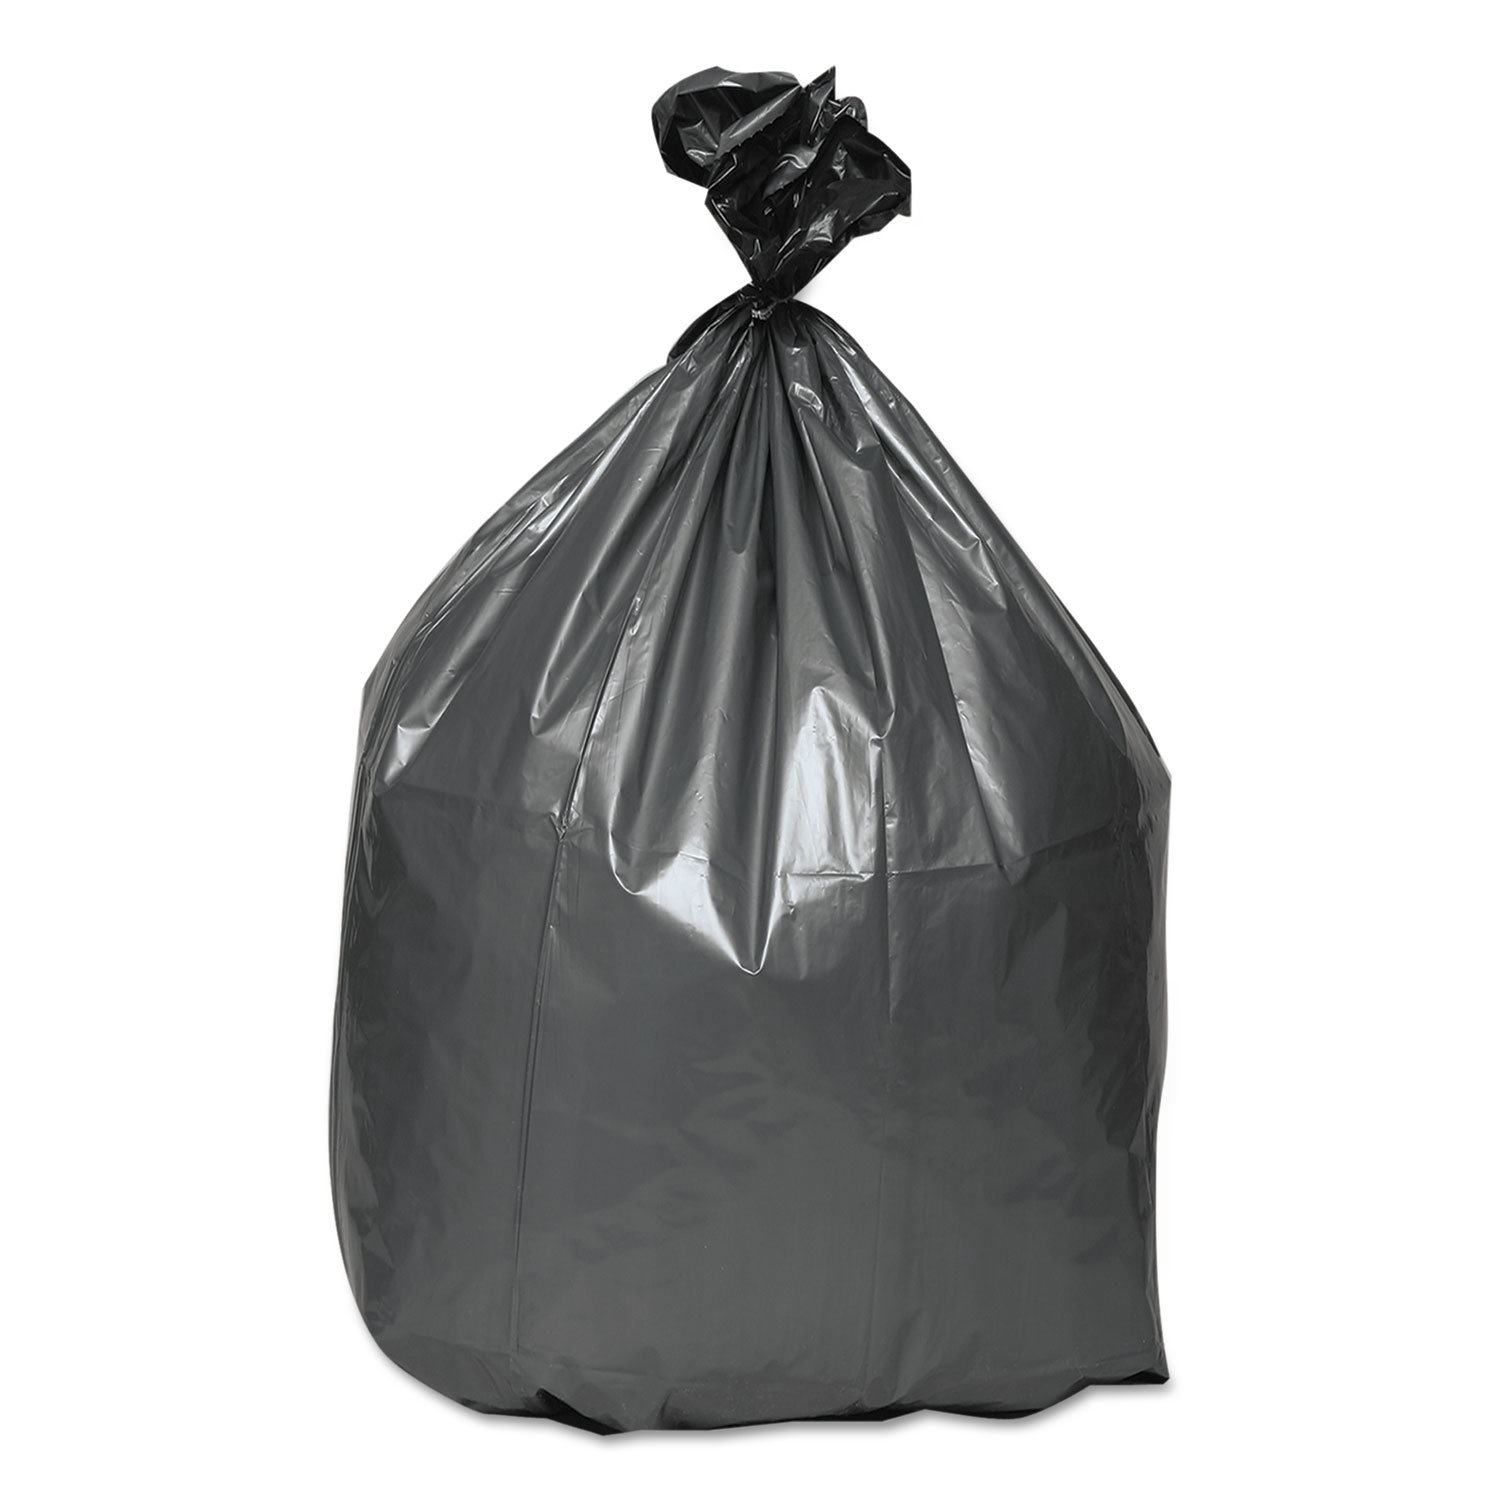 Bomgaars : Bomgaars Trash Bags, Black, 50 Count : Trash Bags